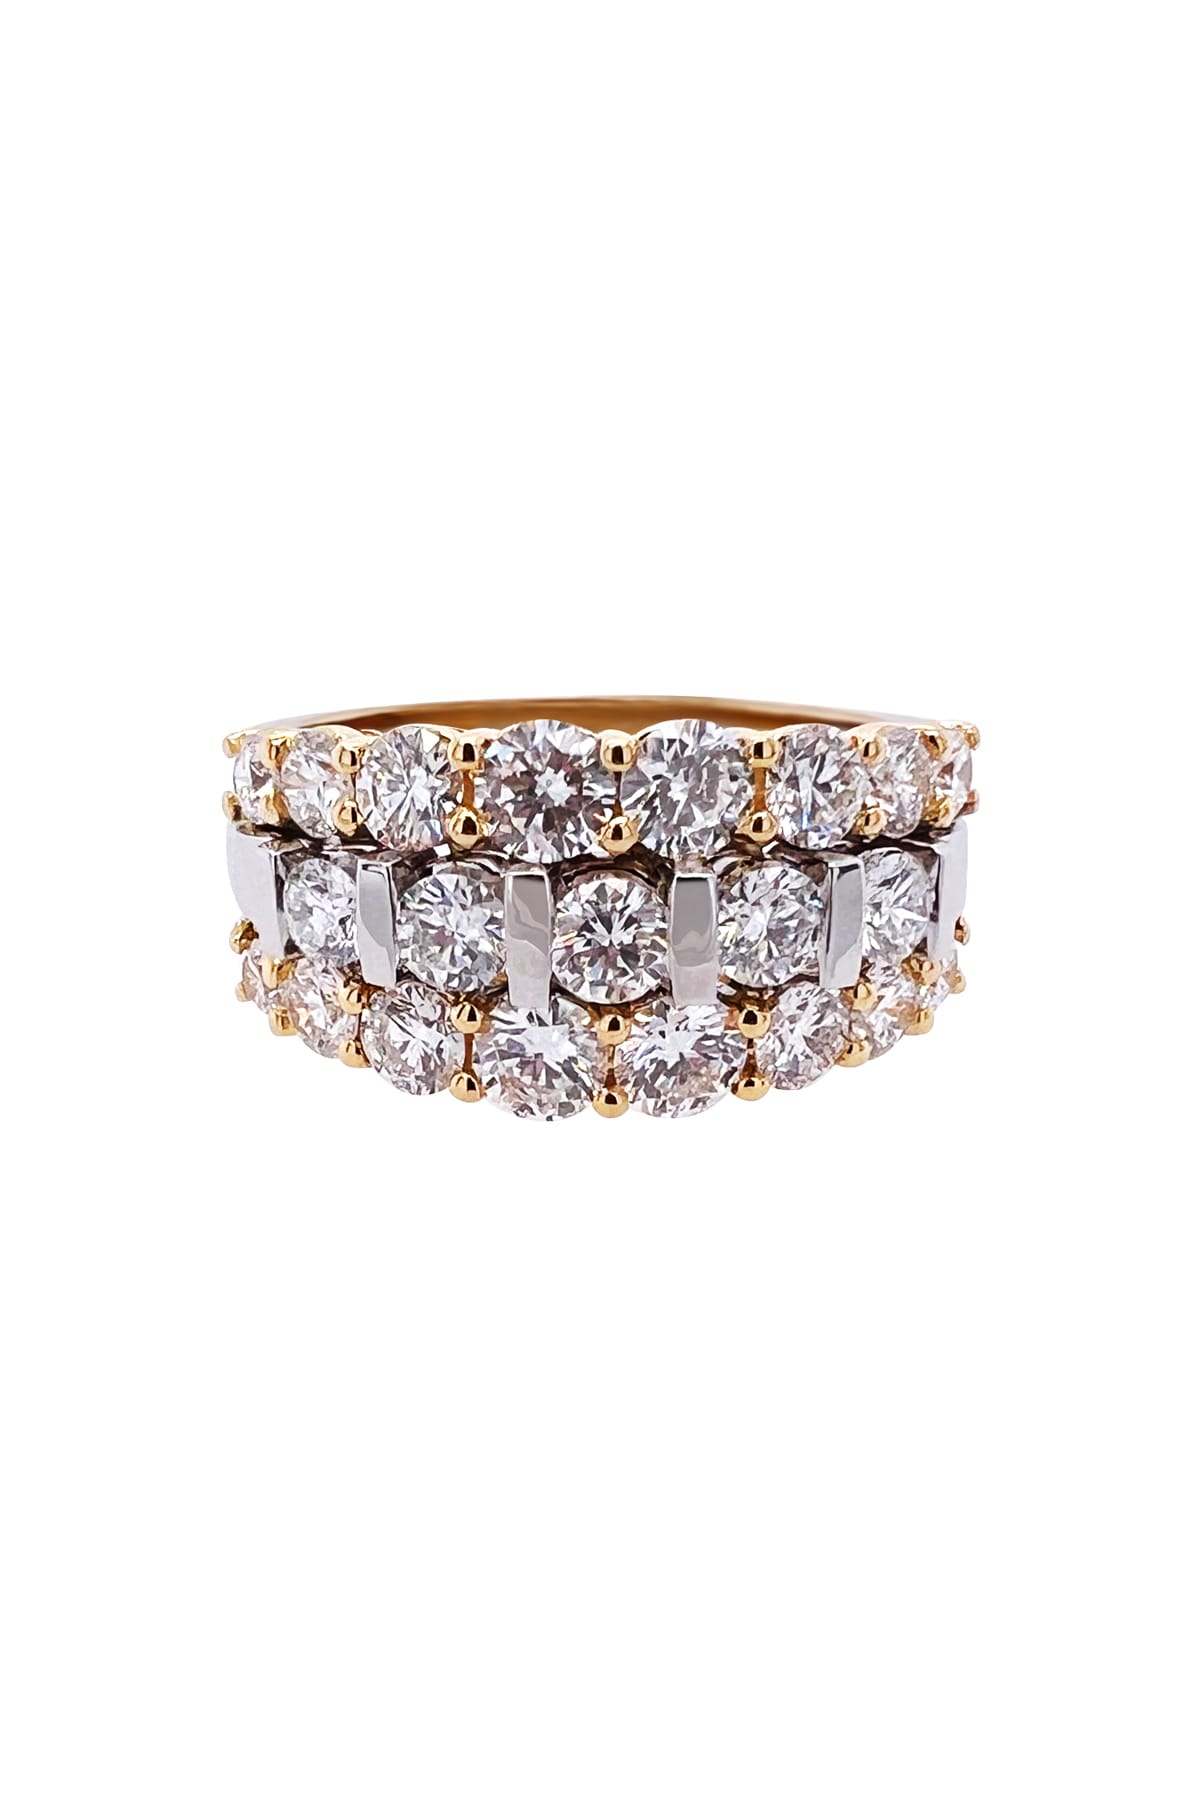 Wide Diamond Ring available at LeGassick Diamonds and Jewellery Gold Coast, Australia.